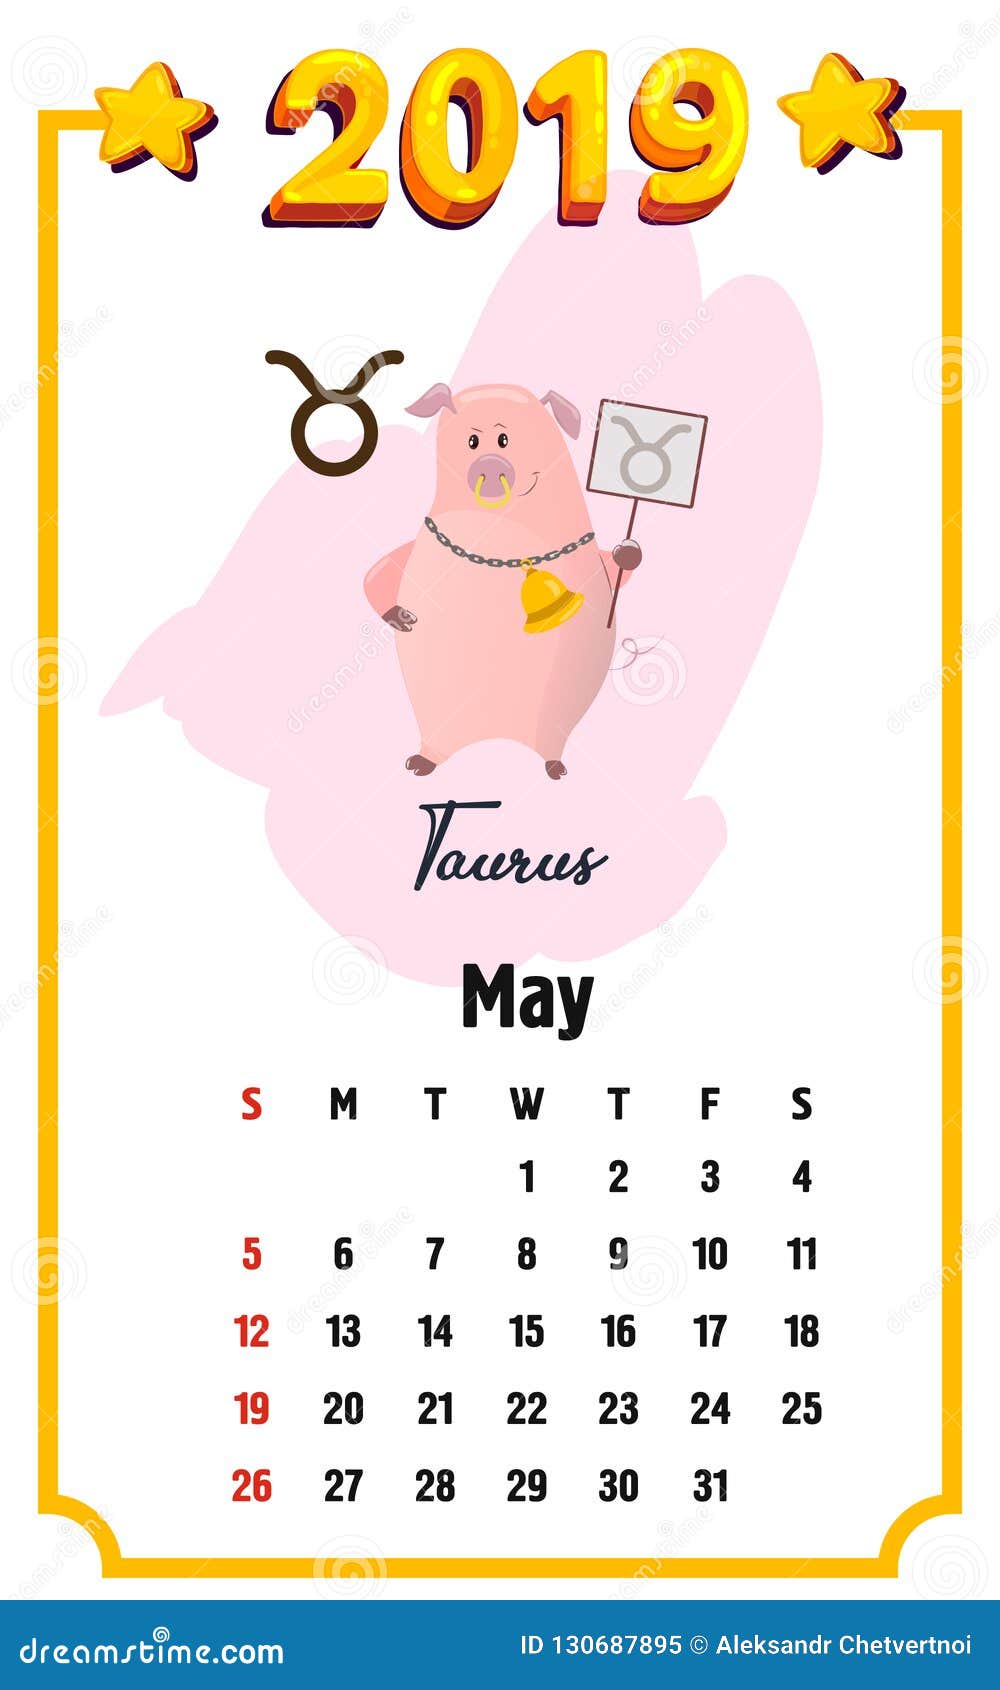 Taurus Horoscope 2019: You May Indulge In Leisure